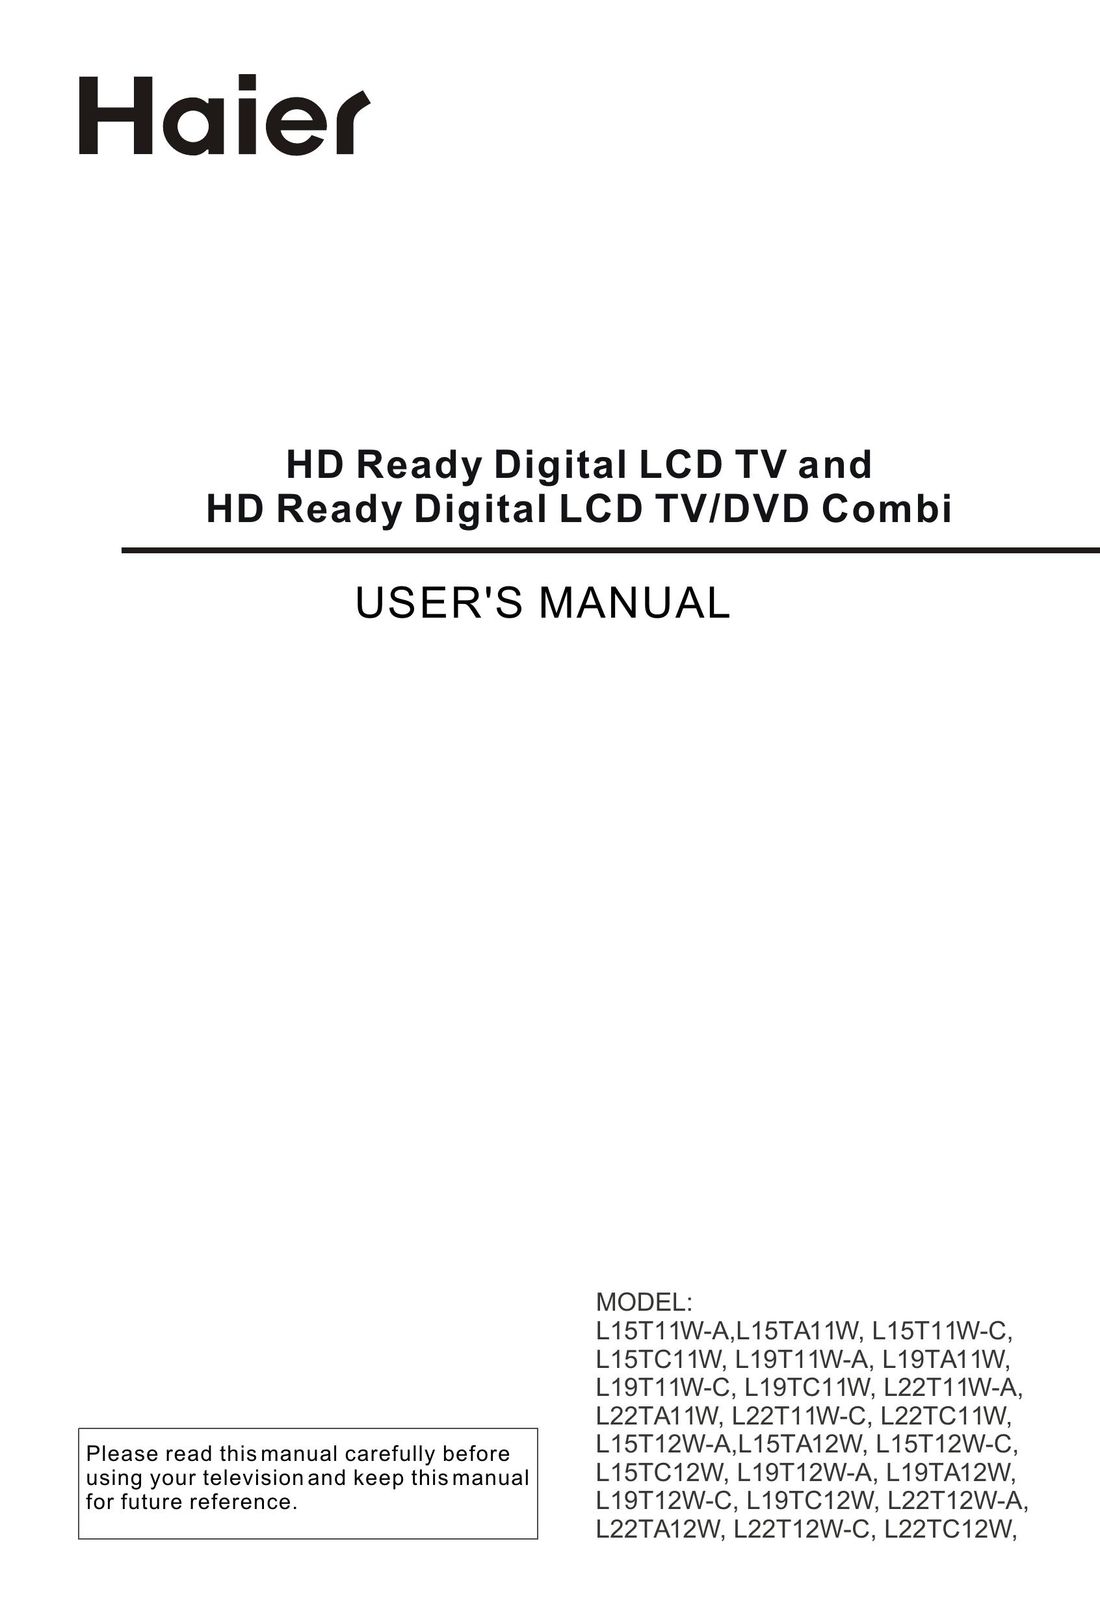 Haier L15T11W-A TV DVD Combo User Manual